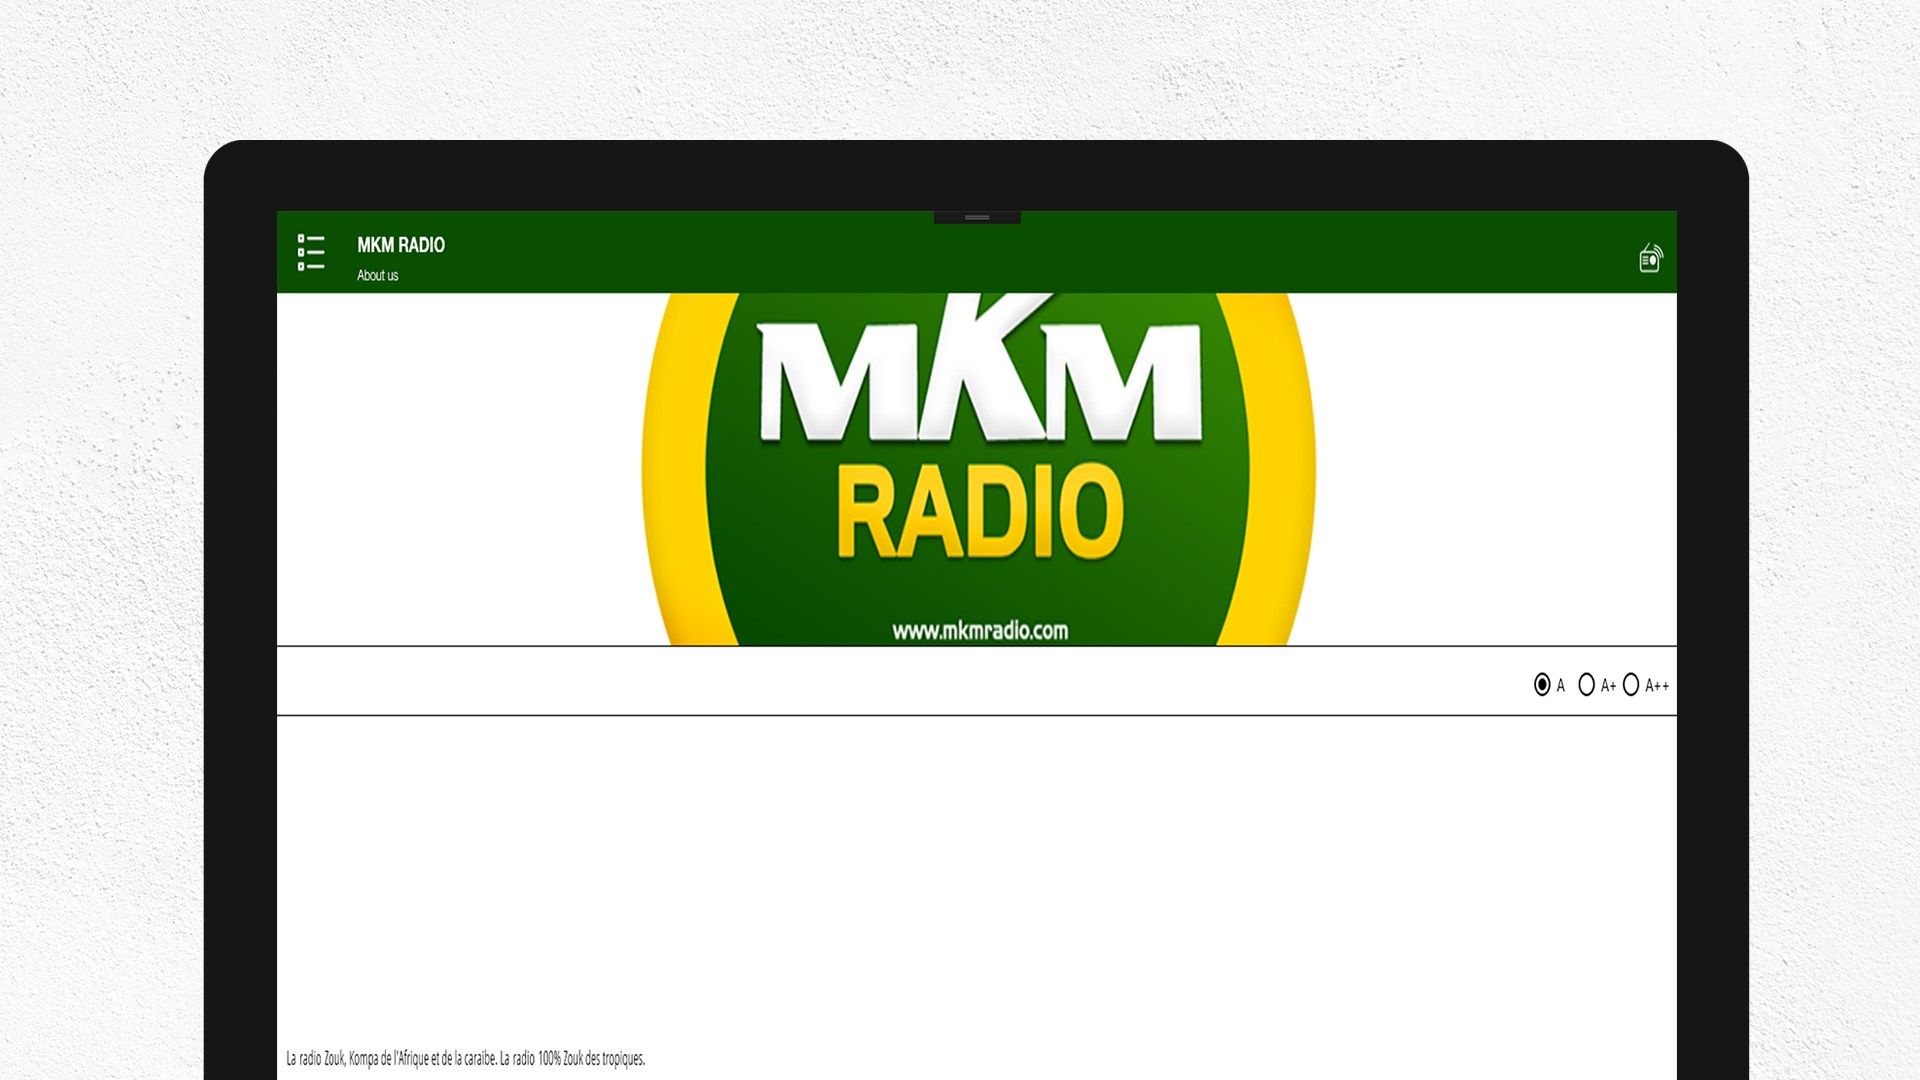 MKM RADIO